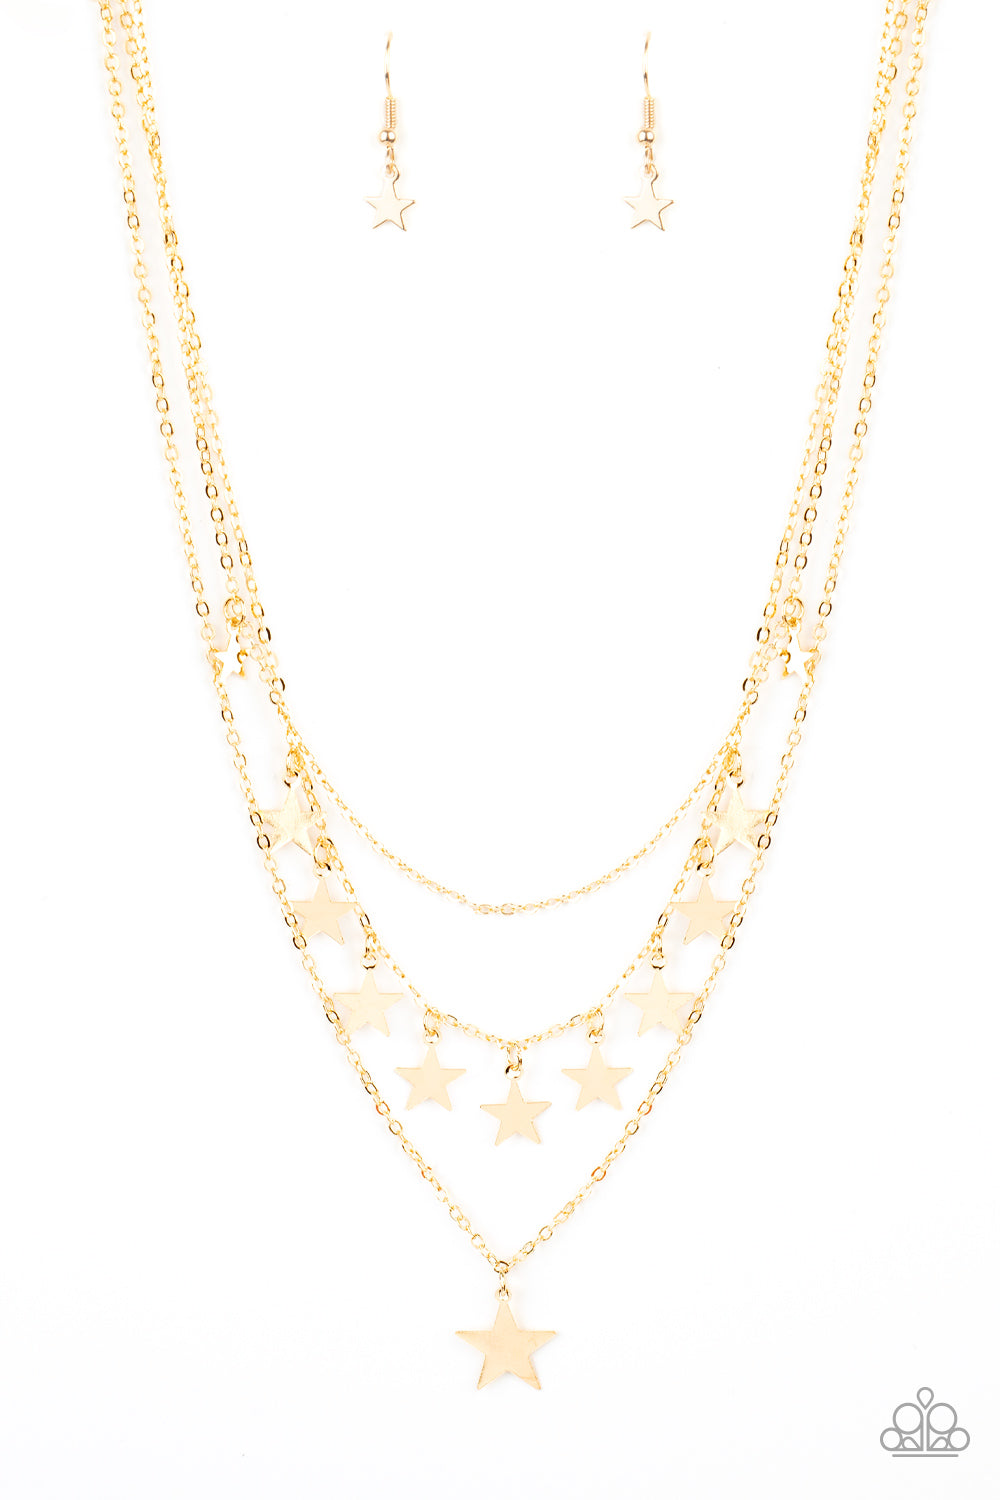 Americana Girl Necklace (Gold, Silver)